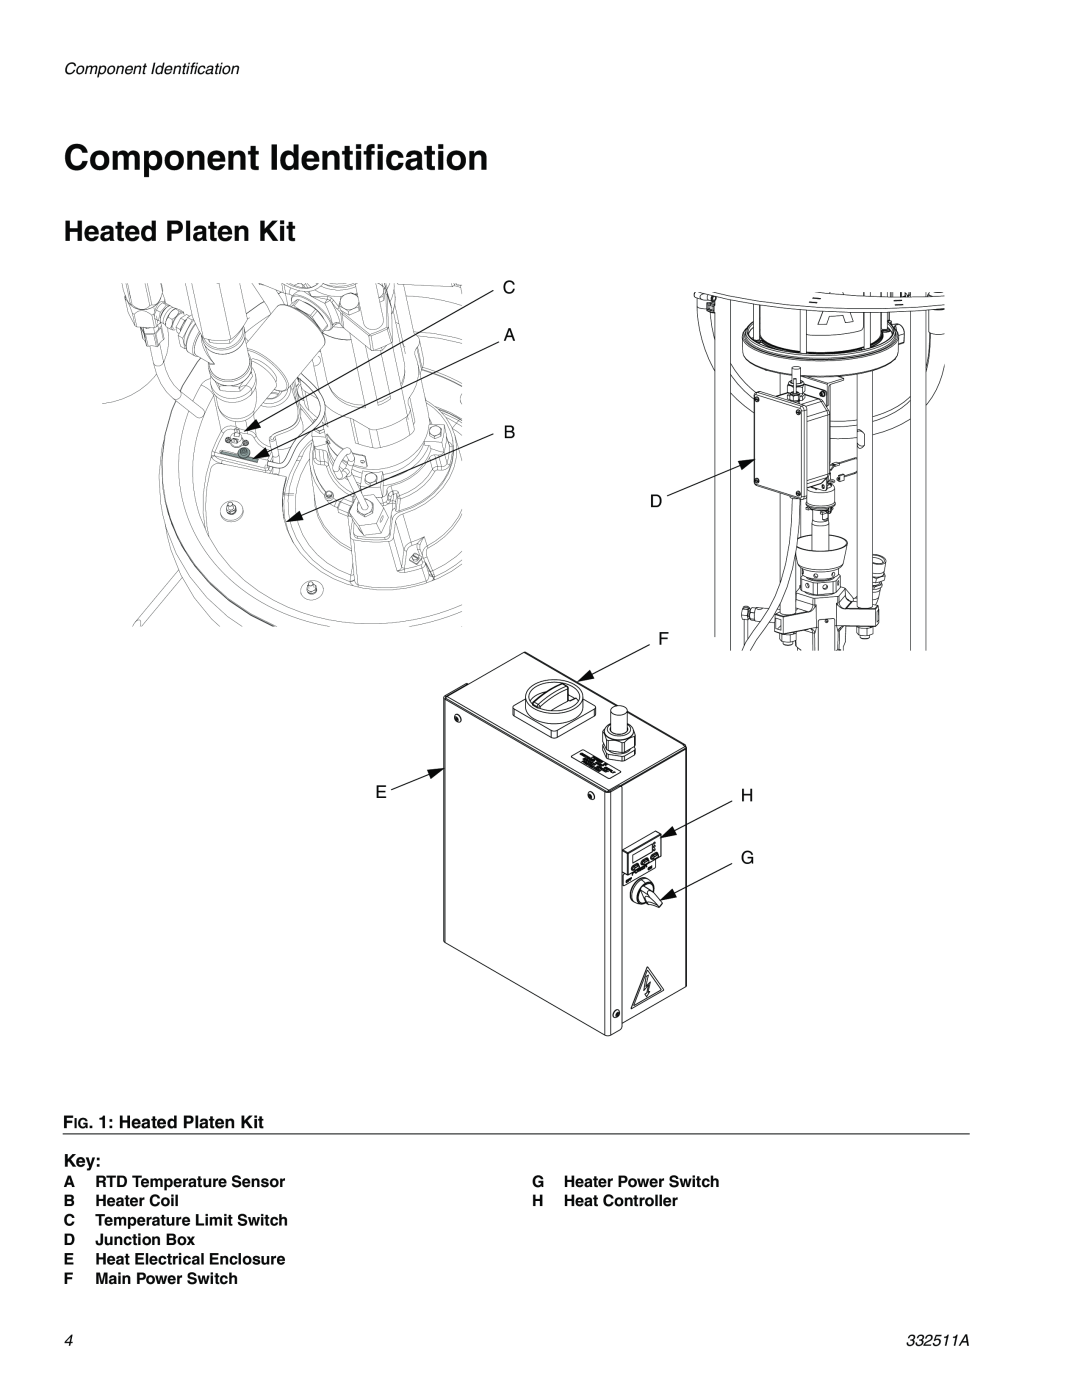 Graco 24R200 operation manual Component Identification, Heated Platen Kit Key 